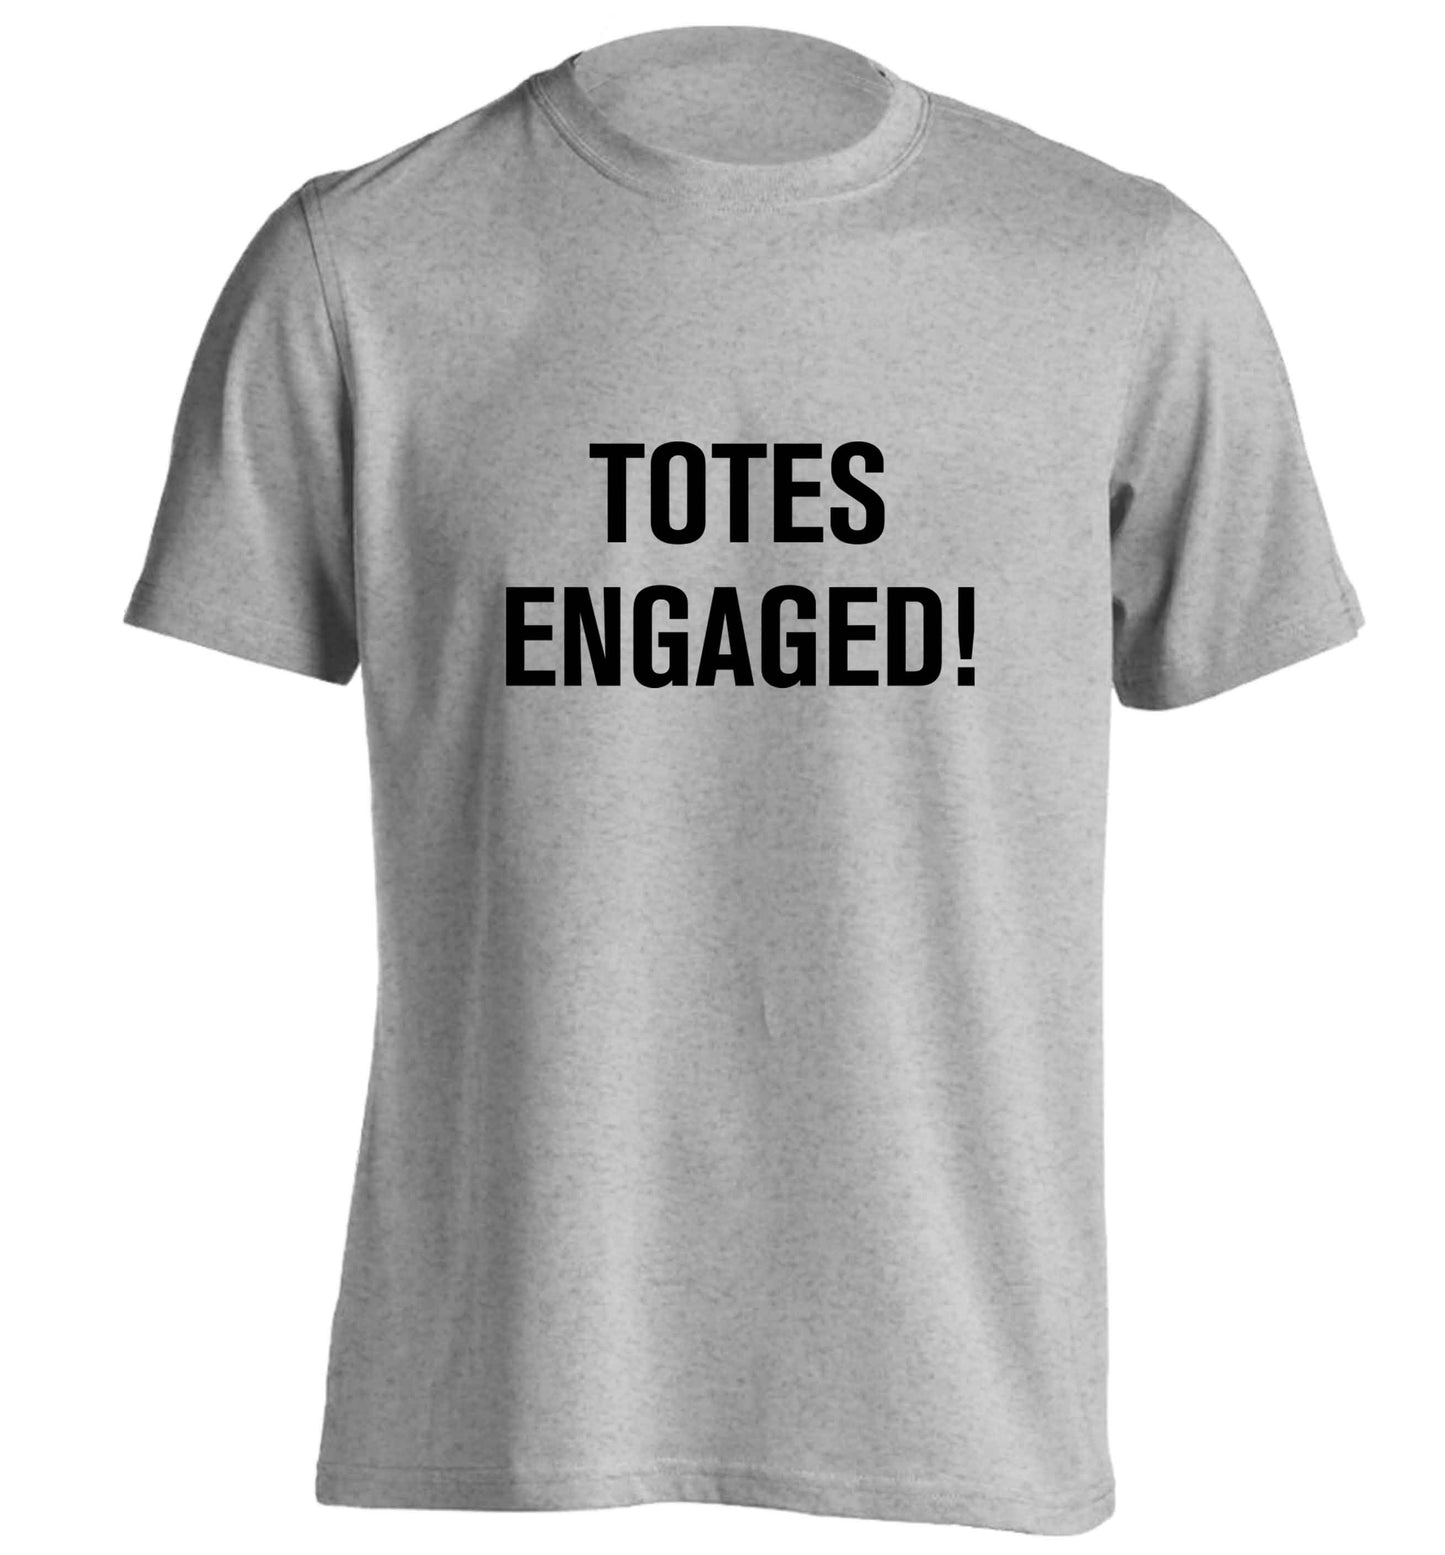 Totes engaged adults unisex grey Tshirt 2XL